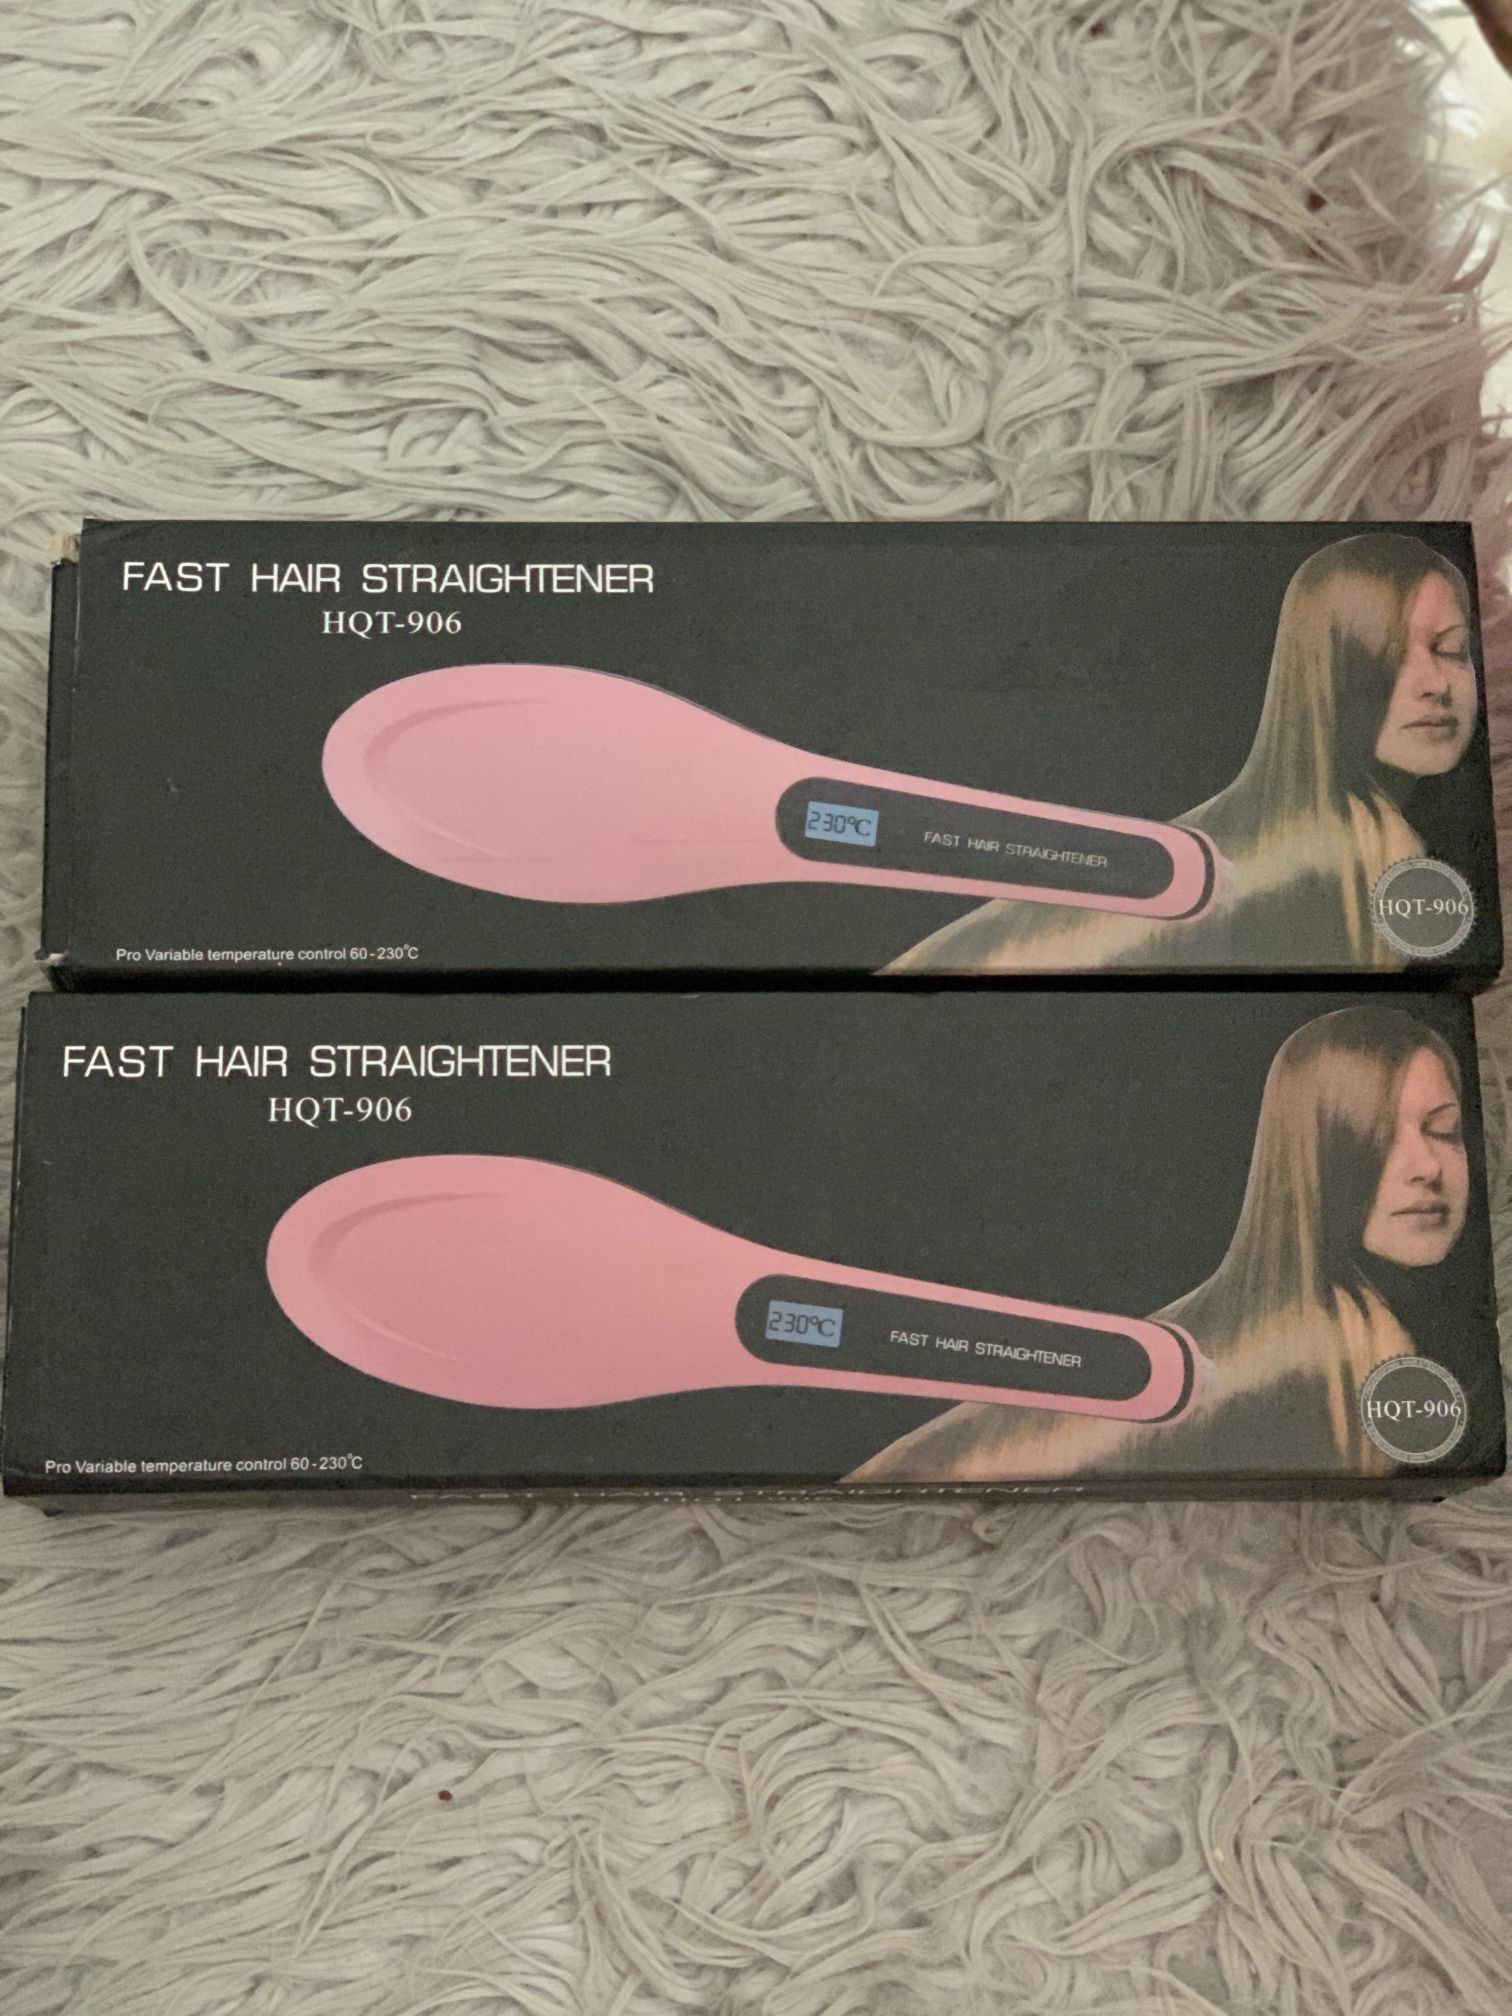 Fast Hair straightener